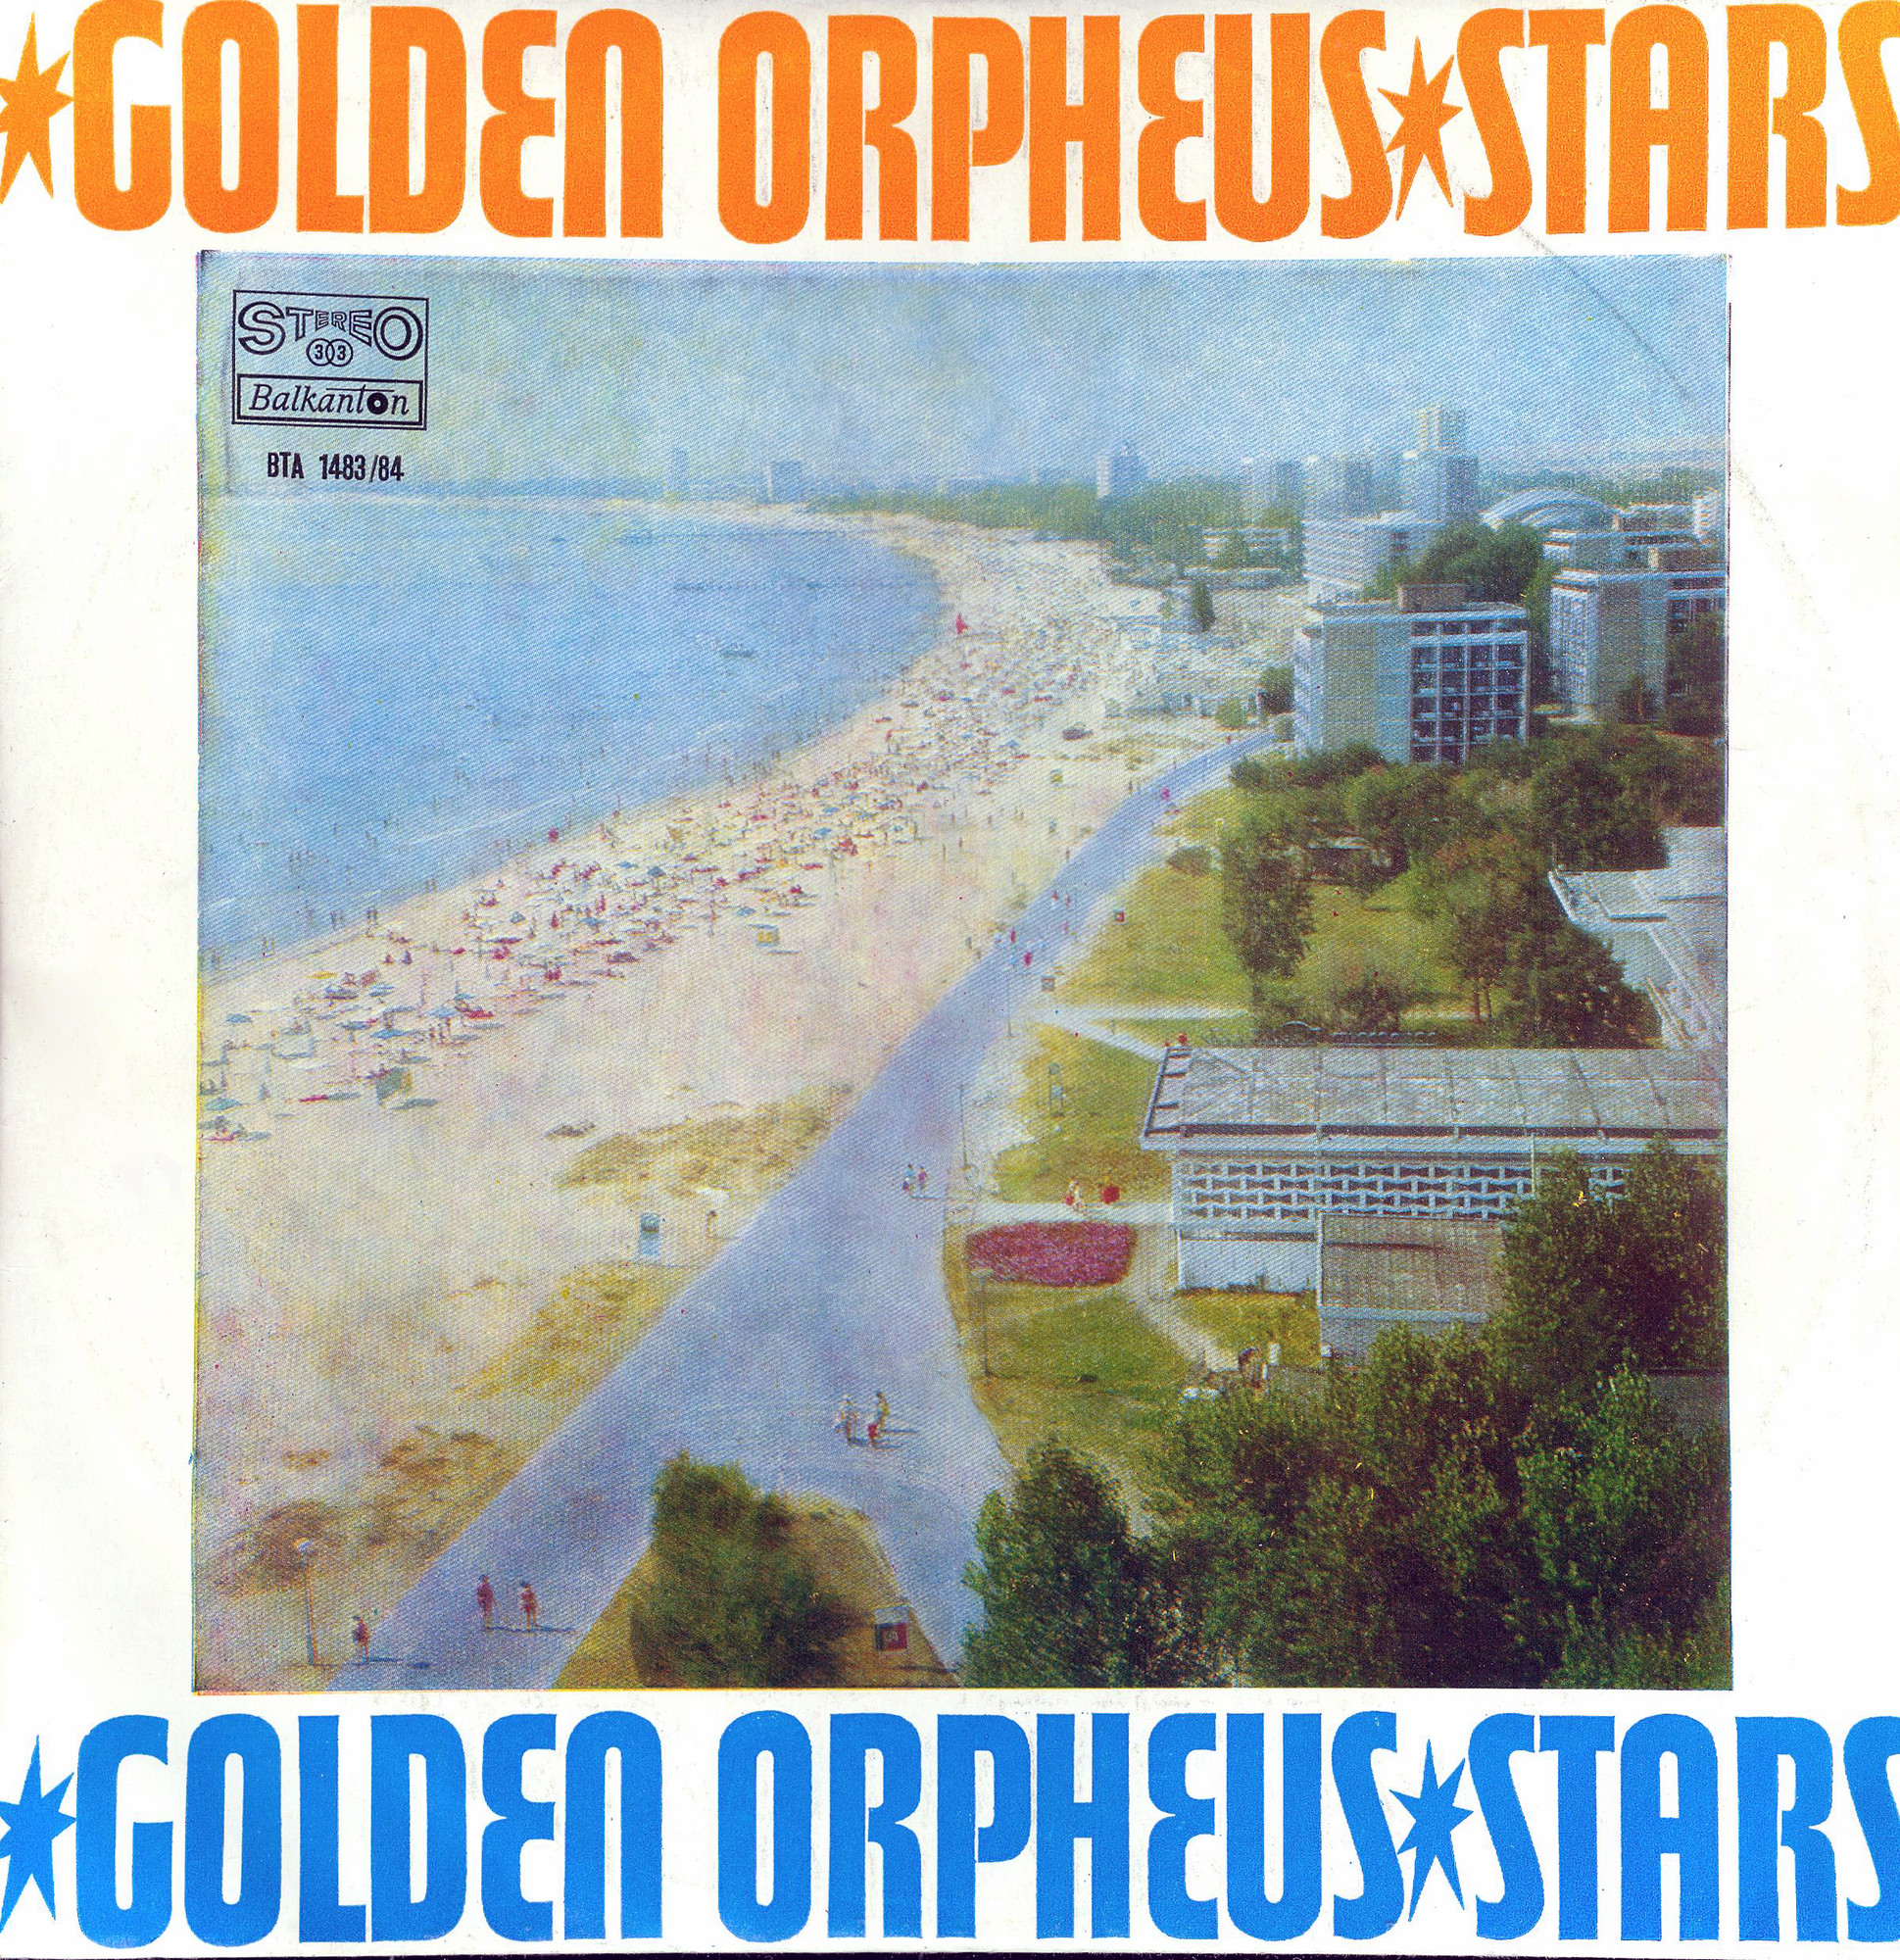 Stars of the Golden Orpheus / Звезды "Золотого Орфея"